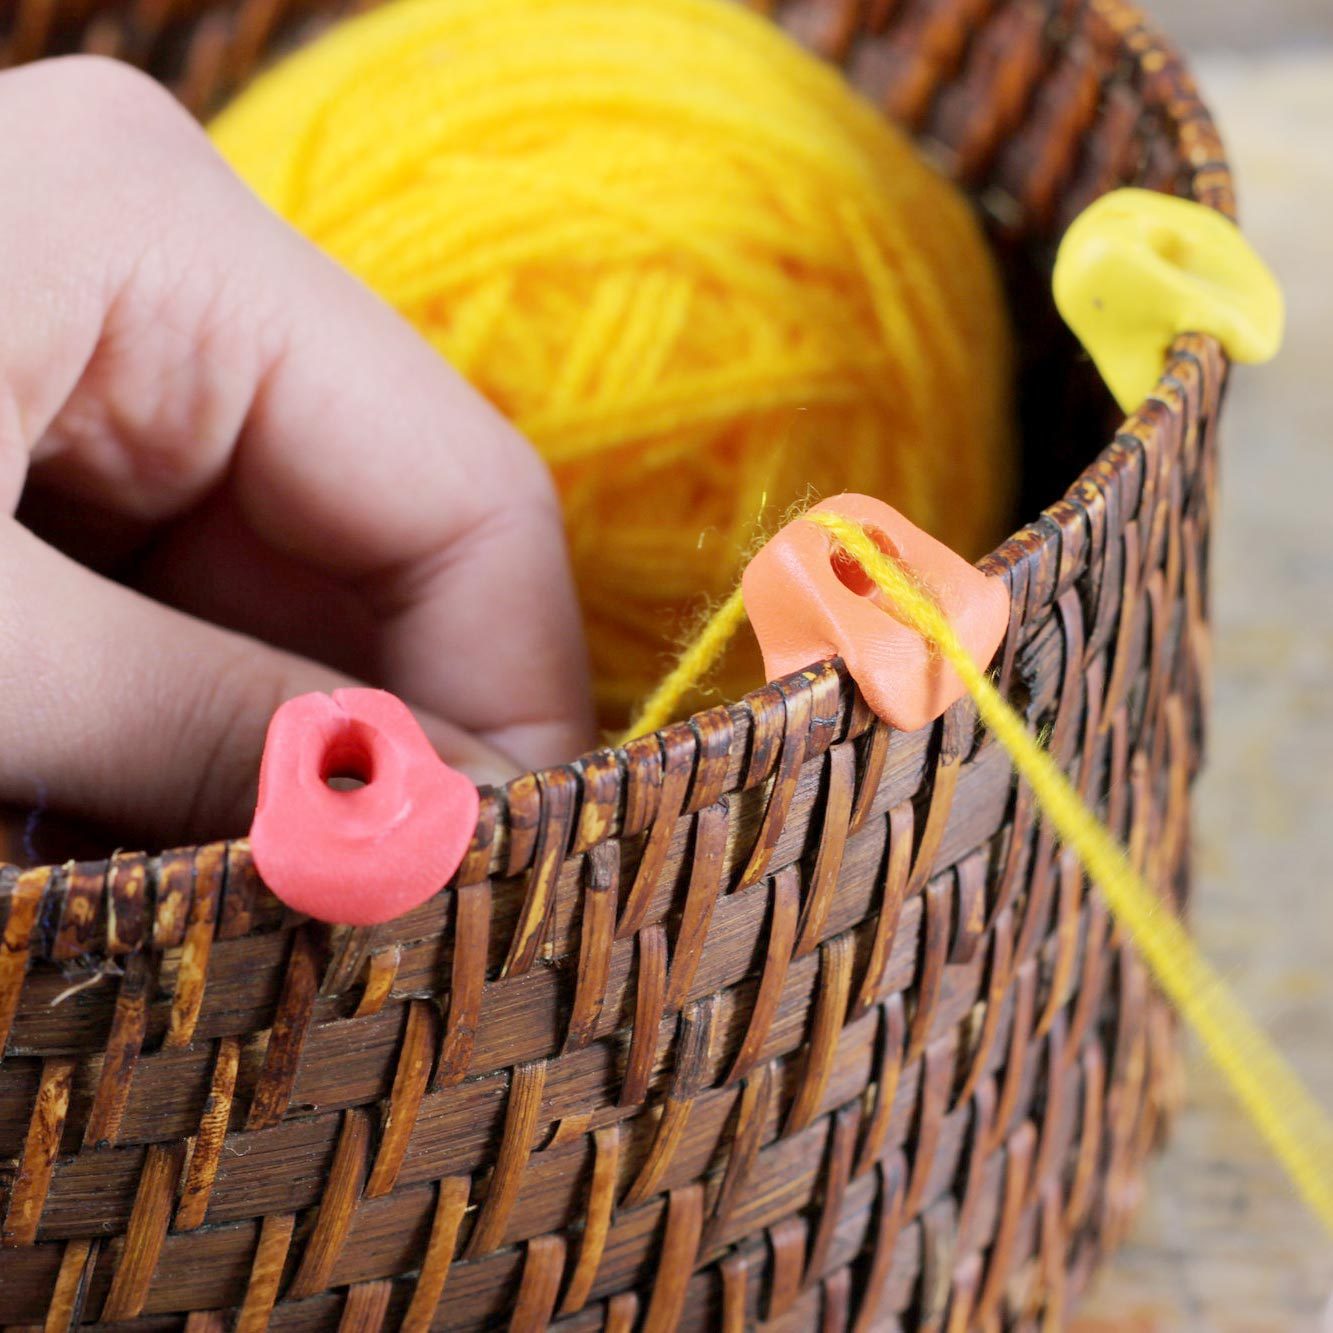 homemade yarn holder on the edge of a basket